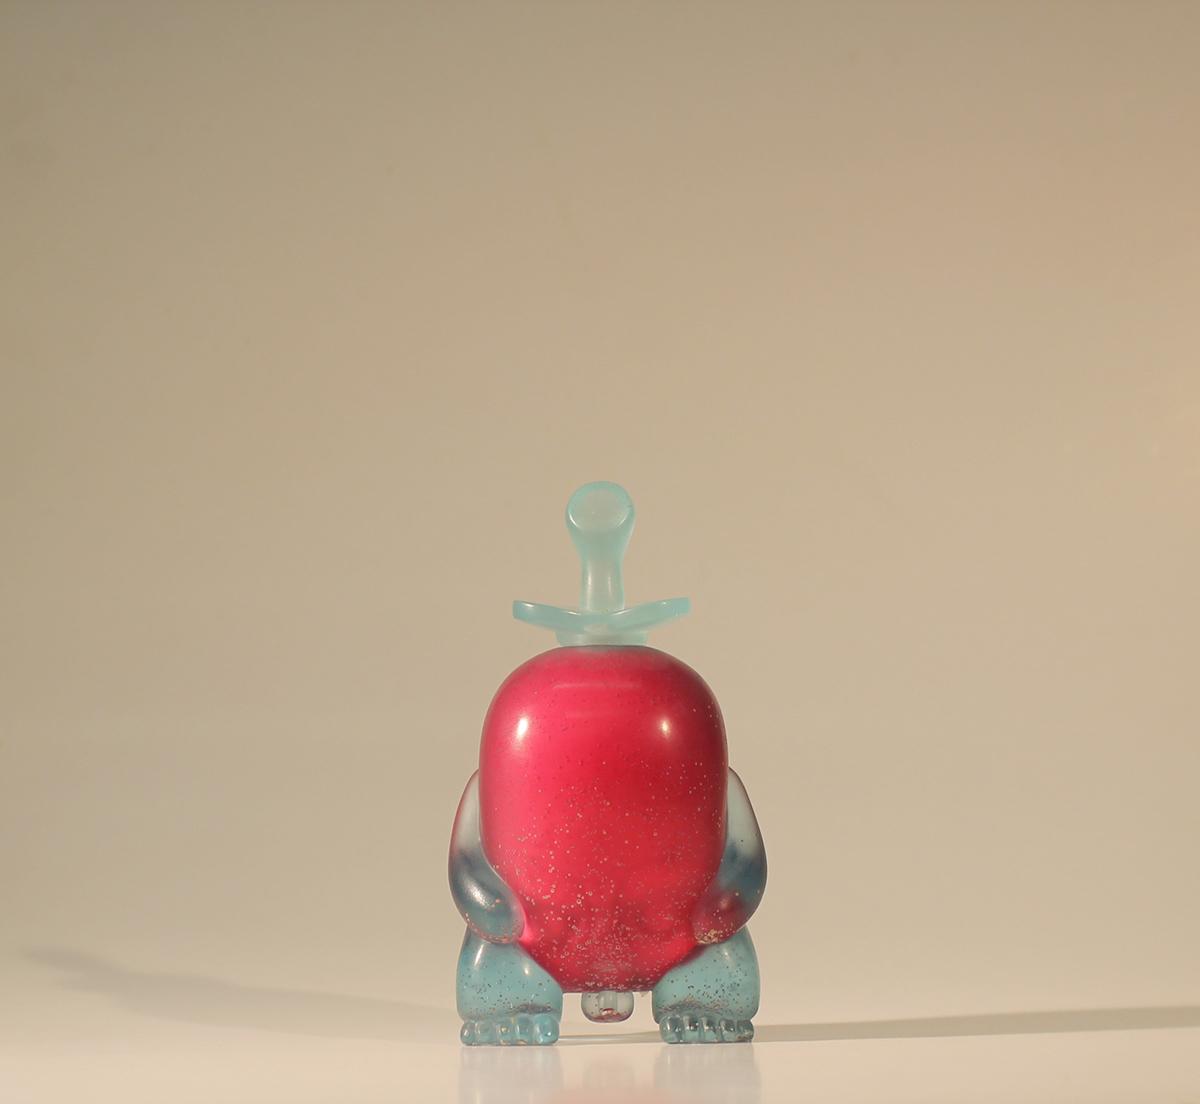 freud sigmund psychoanalysis uncanny complex narcissism toy design handmade resin minimalist toys art object Freudian